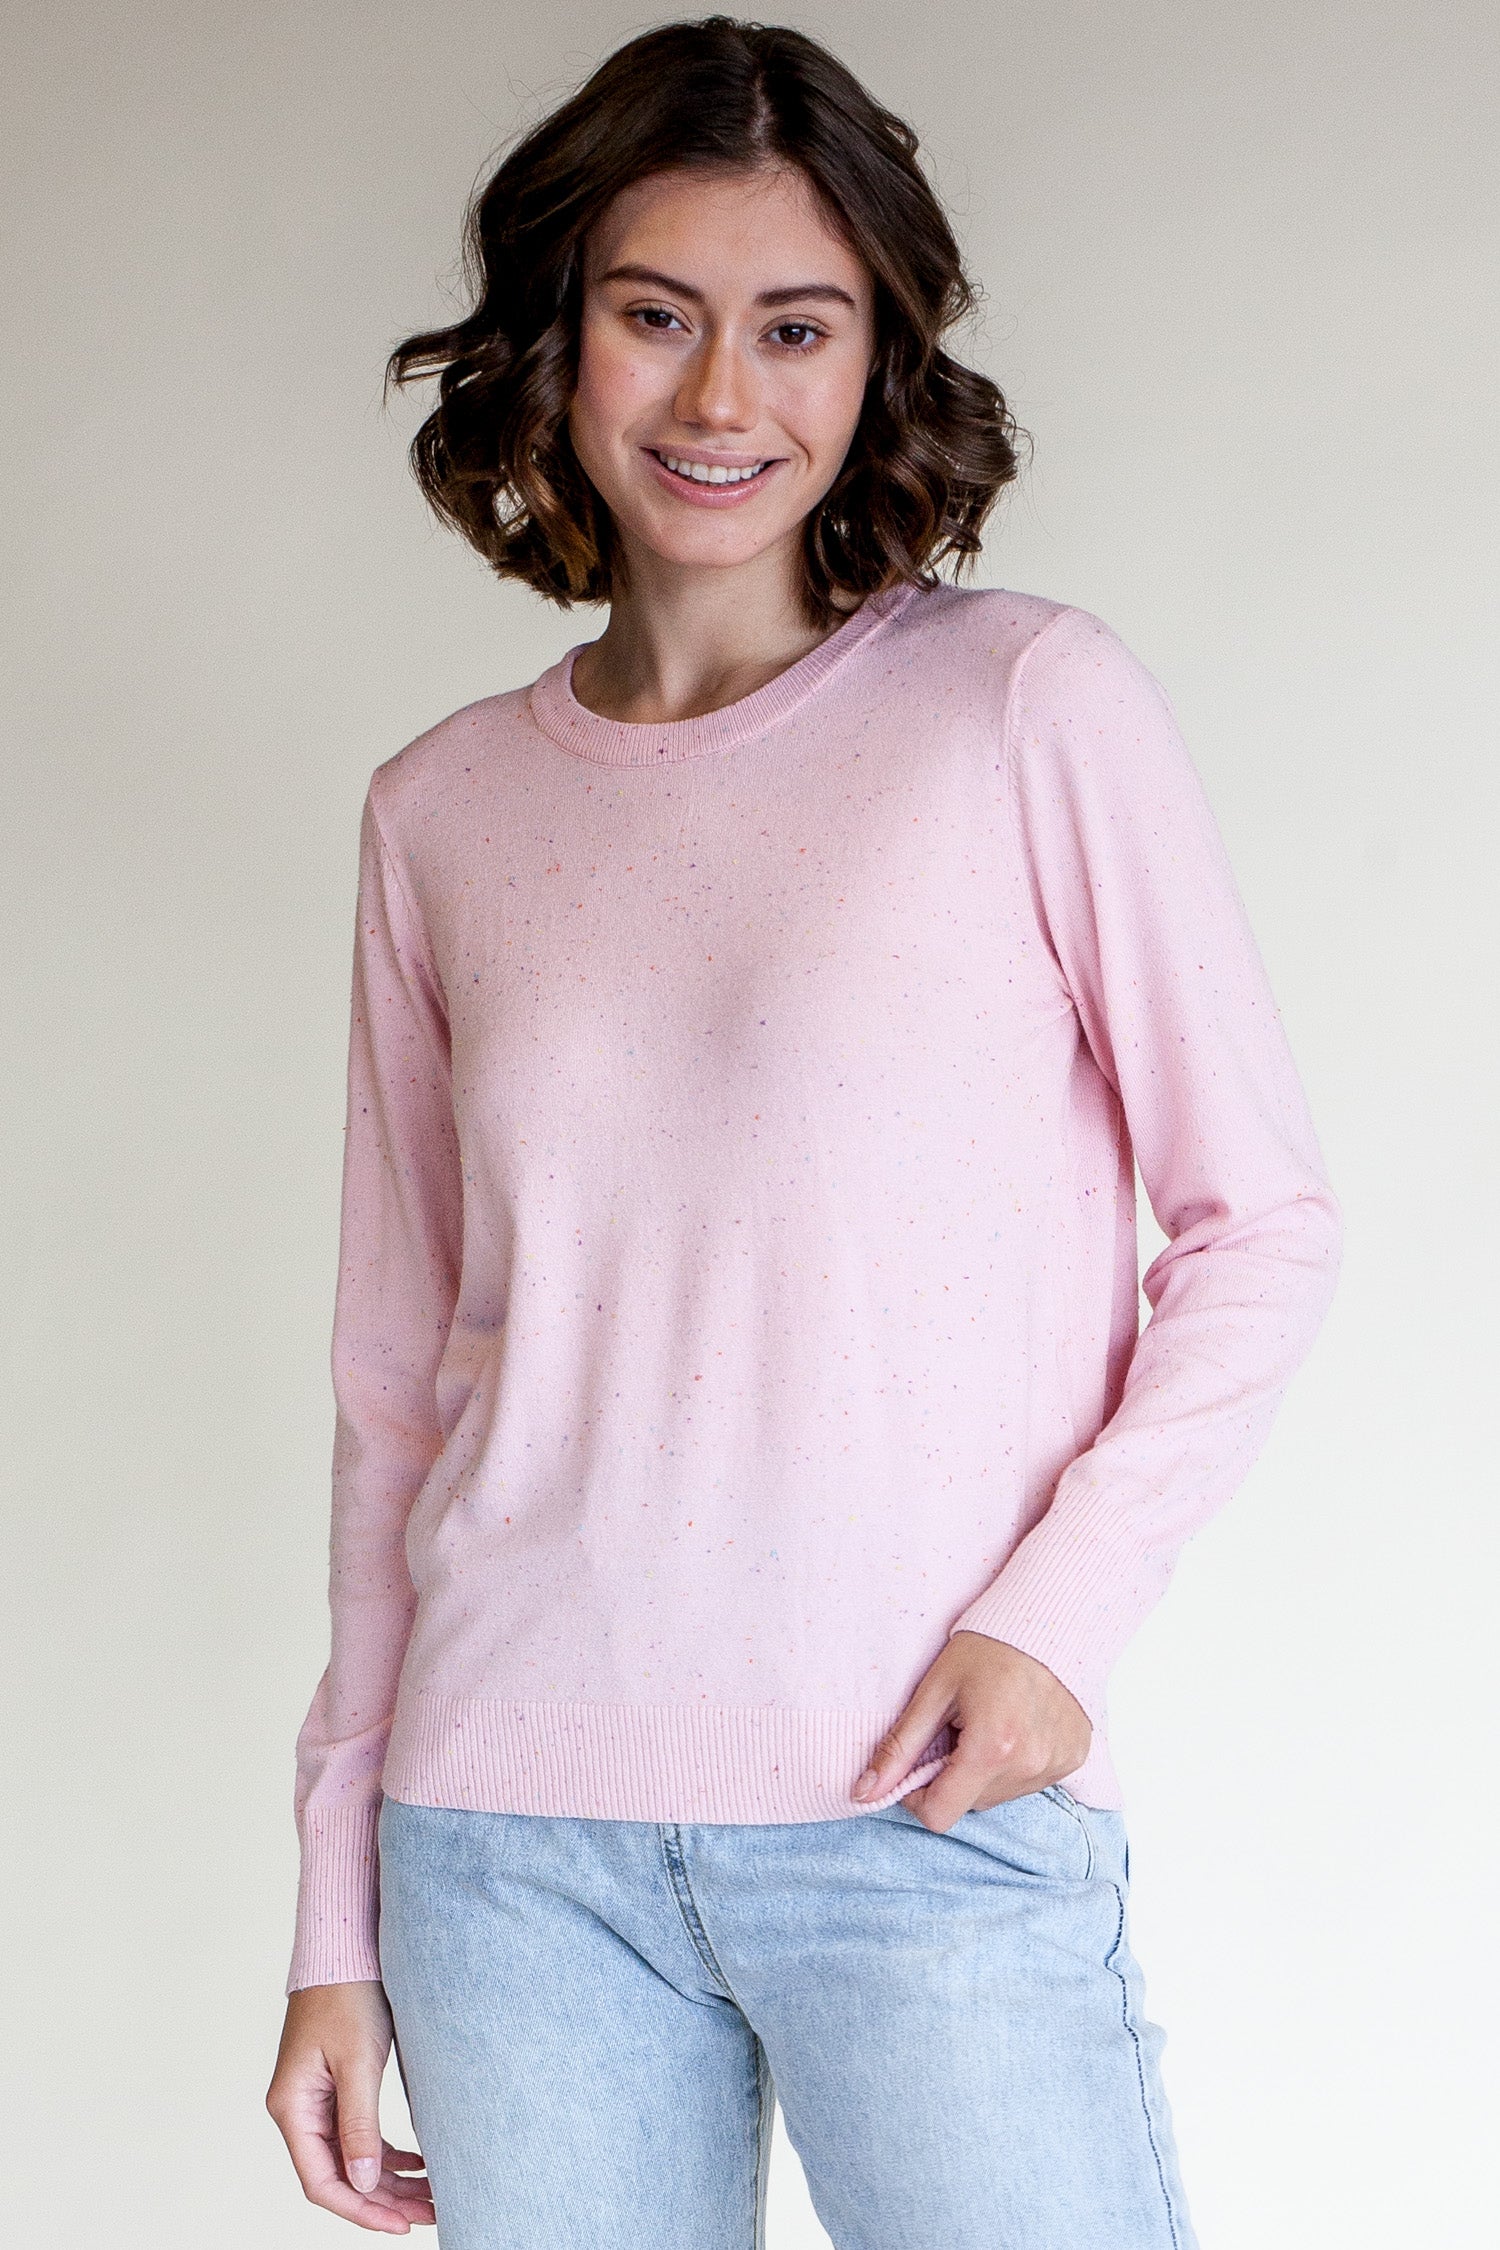 Confetti Sweater- Pink